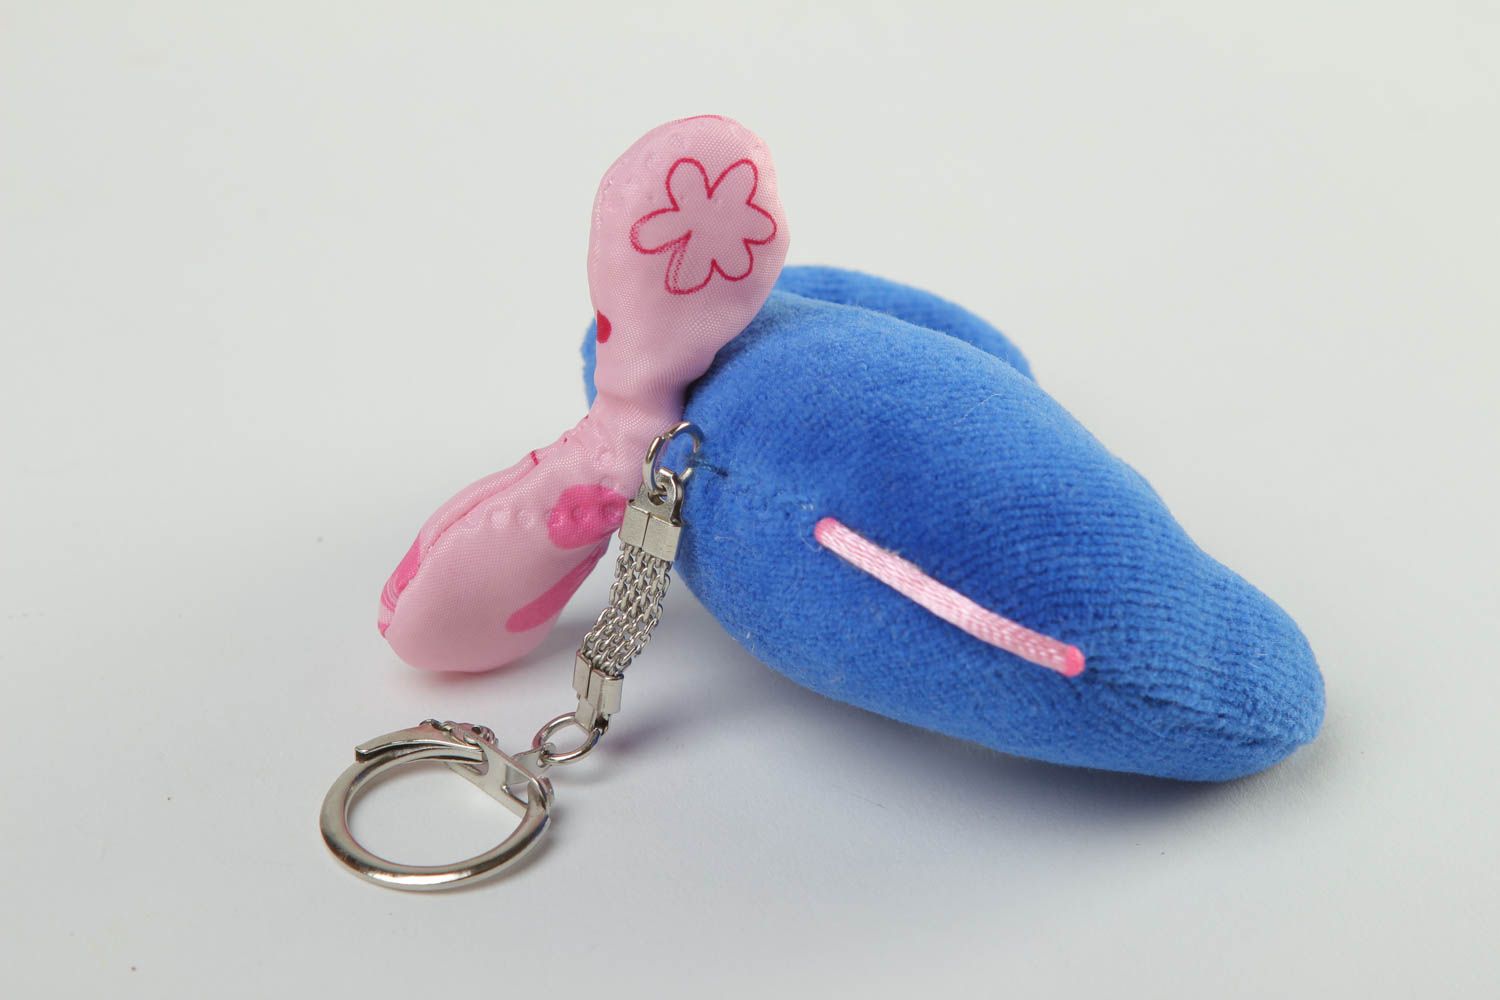 Stylish handmade fabric keychain soft keychain toy cool keyrings gifts for kids photo 4